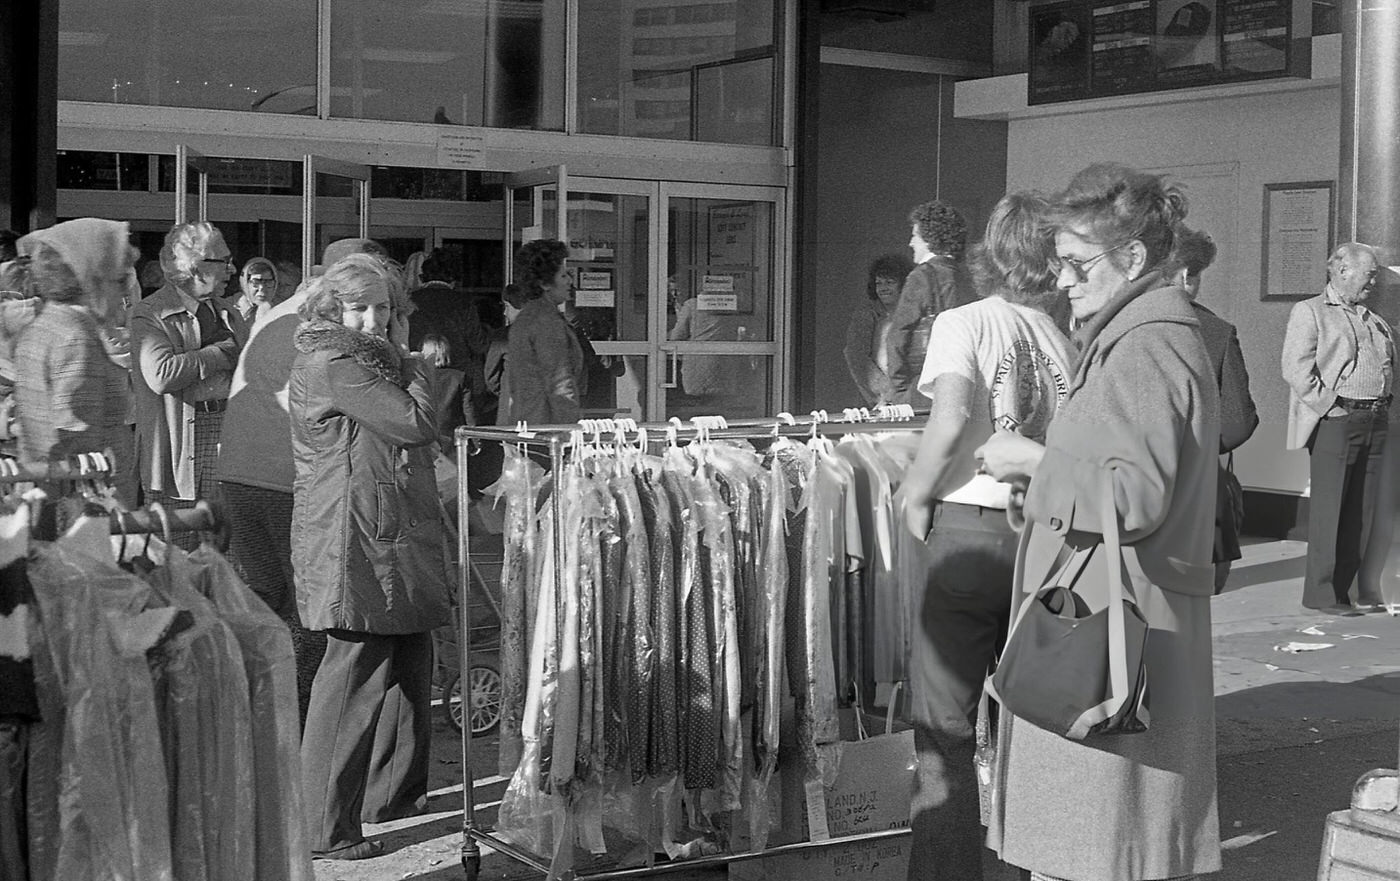 Pedestrians Look At Racks Of Clothing During A Sidewalk Sale On Queens Boulevard, 1980.